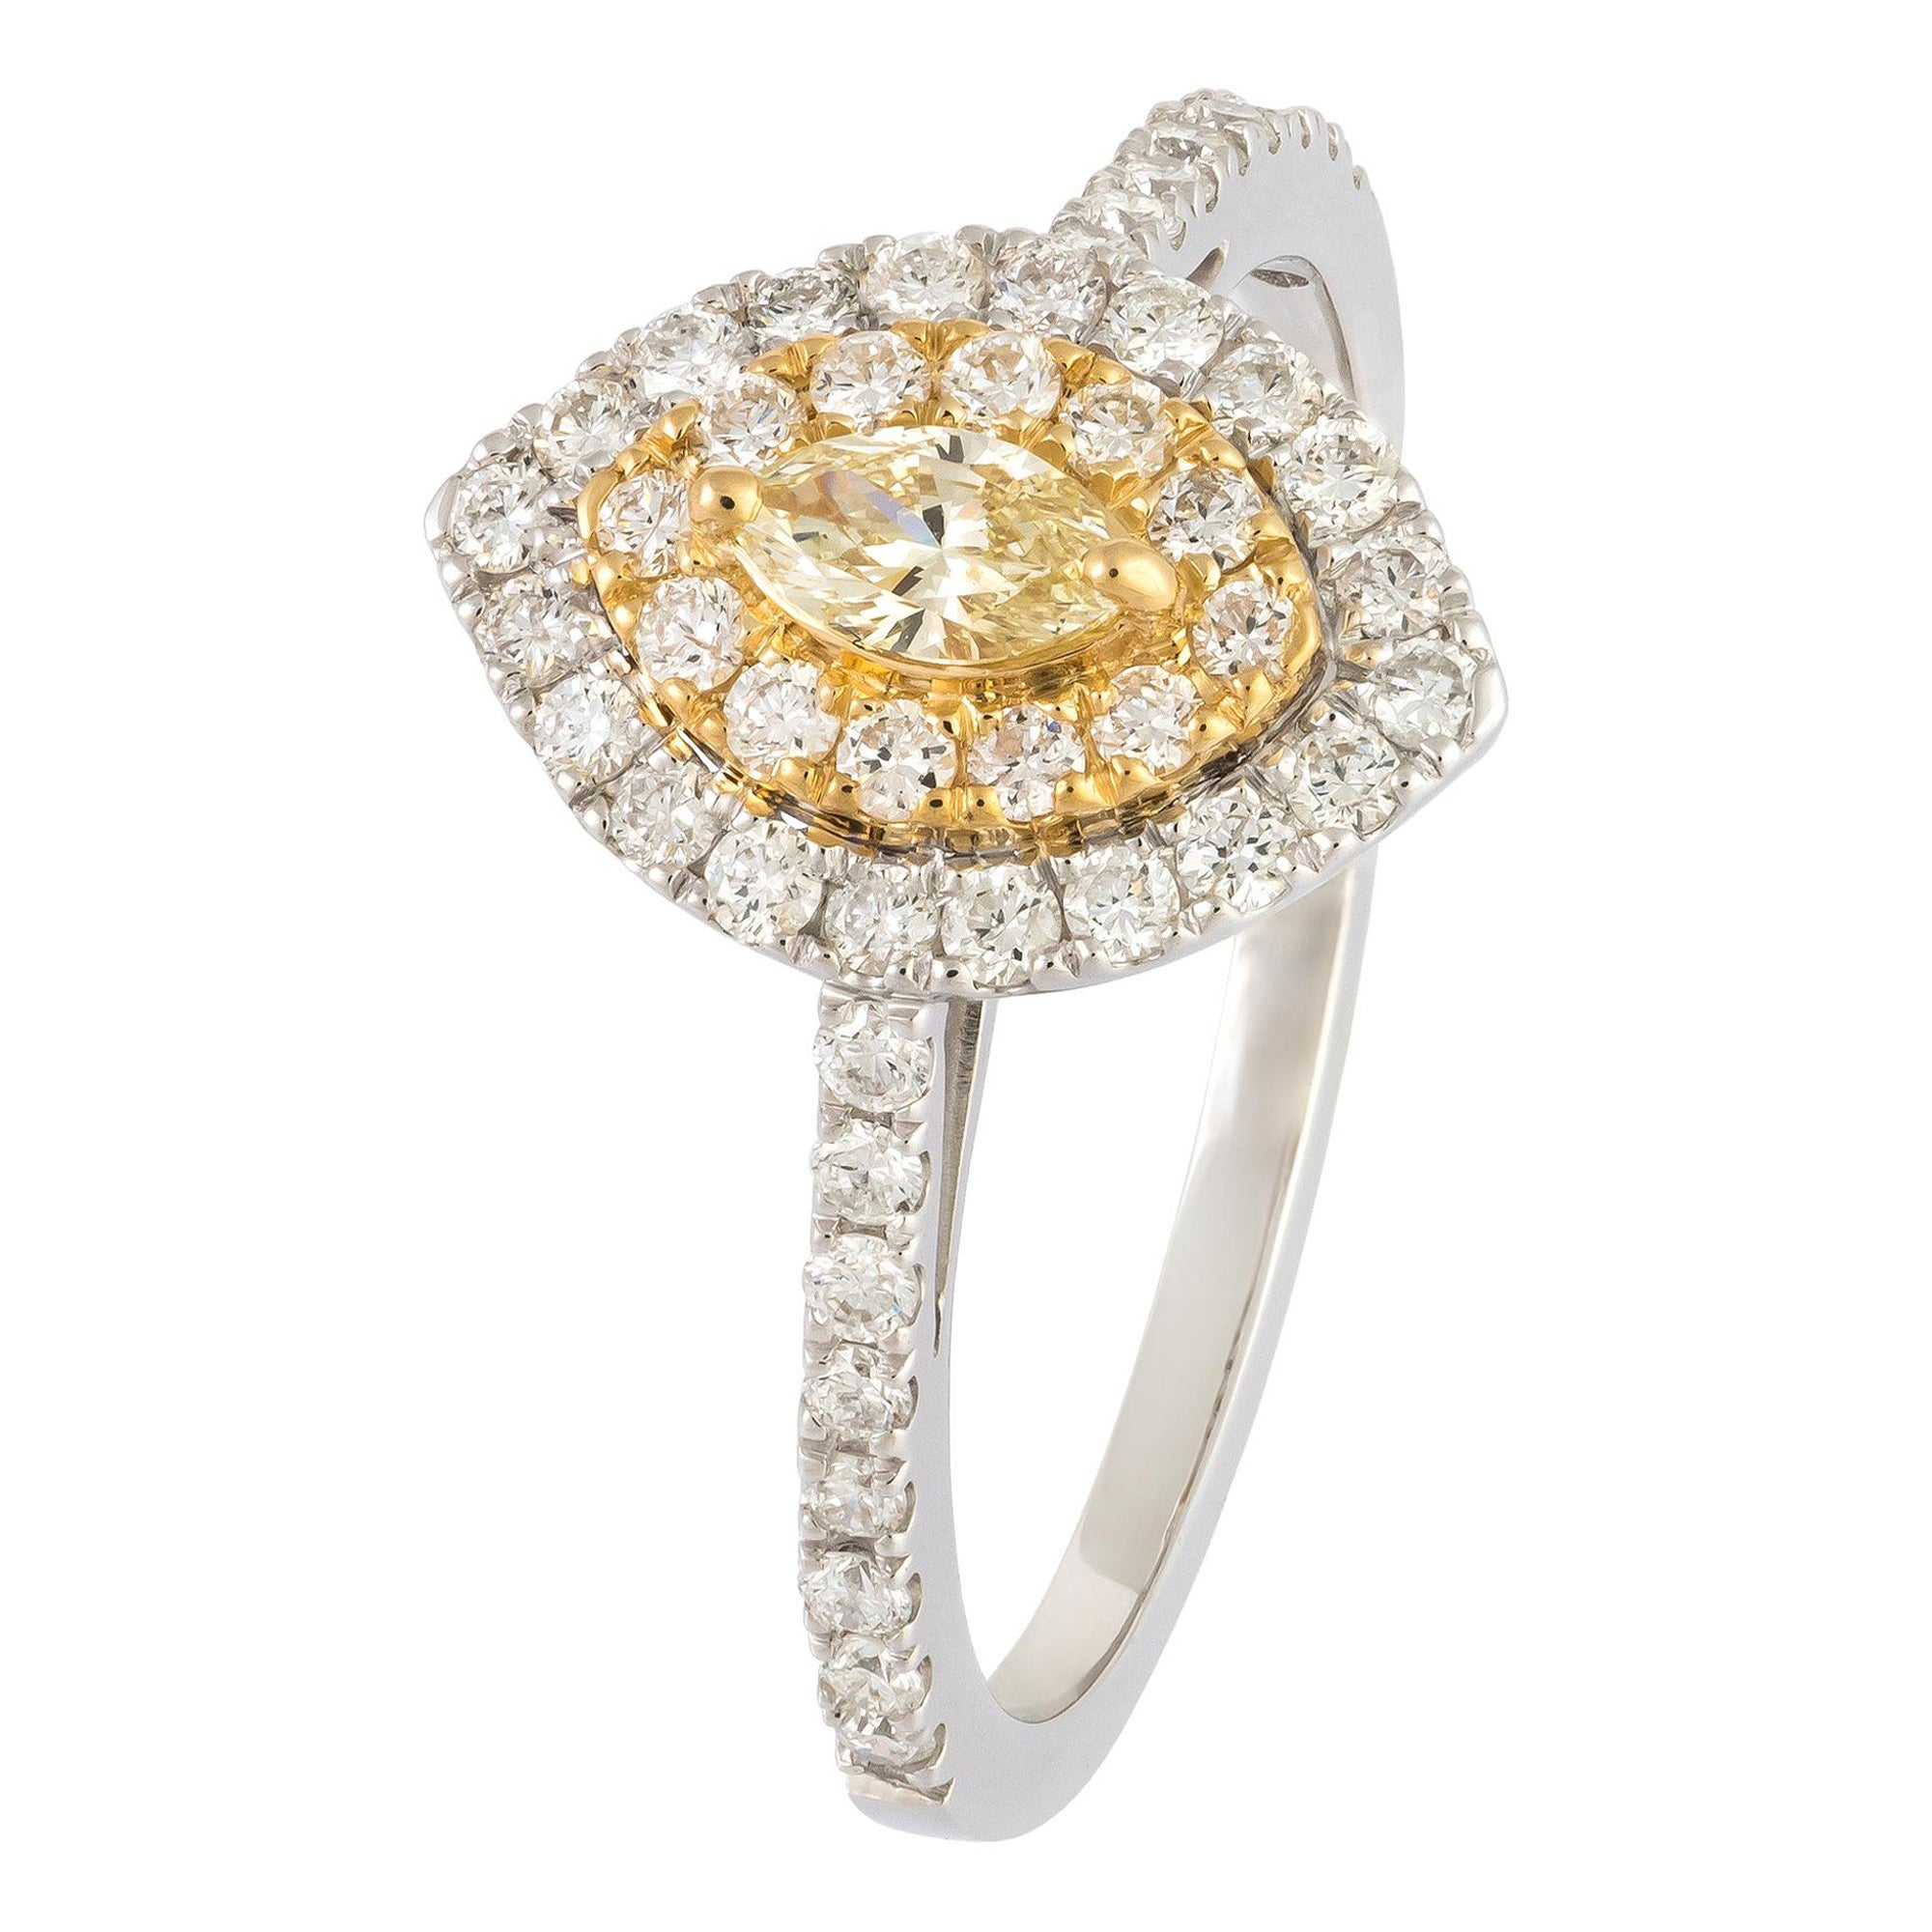 Impressive White Yellow 18K Gold White Yellow Diamond Ring for Her